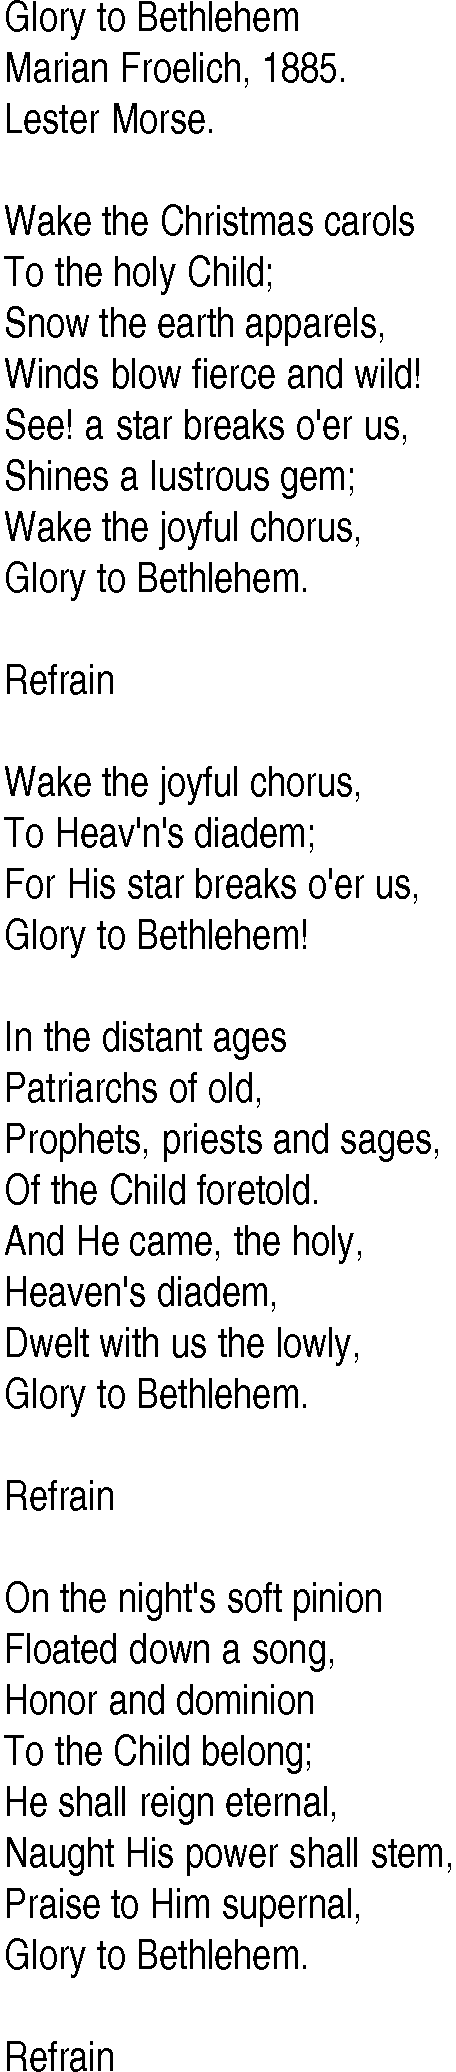 Hymn and Gospel Song: Glory to Bethlehem by Marian Froelich lyrics